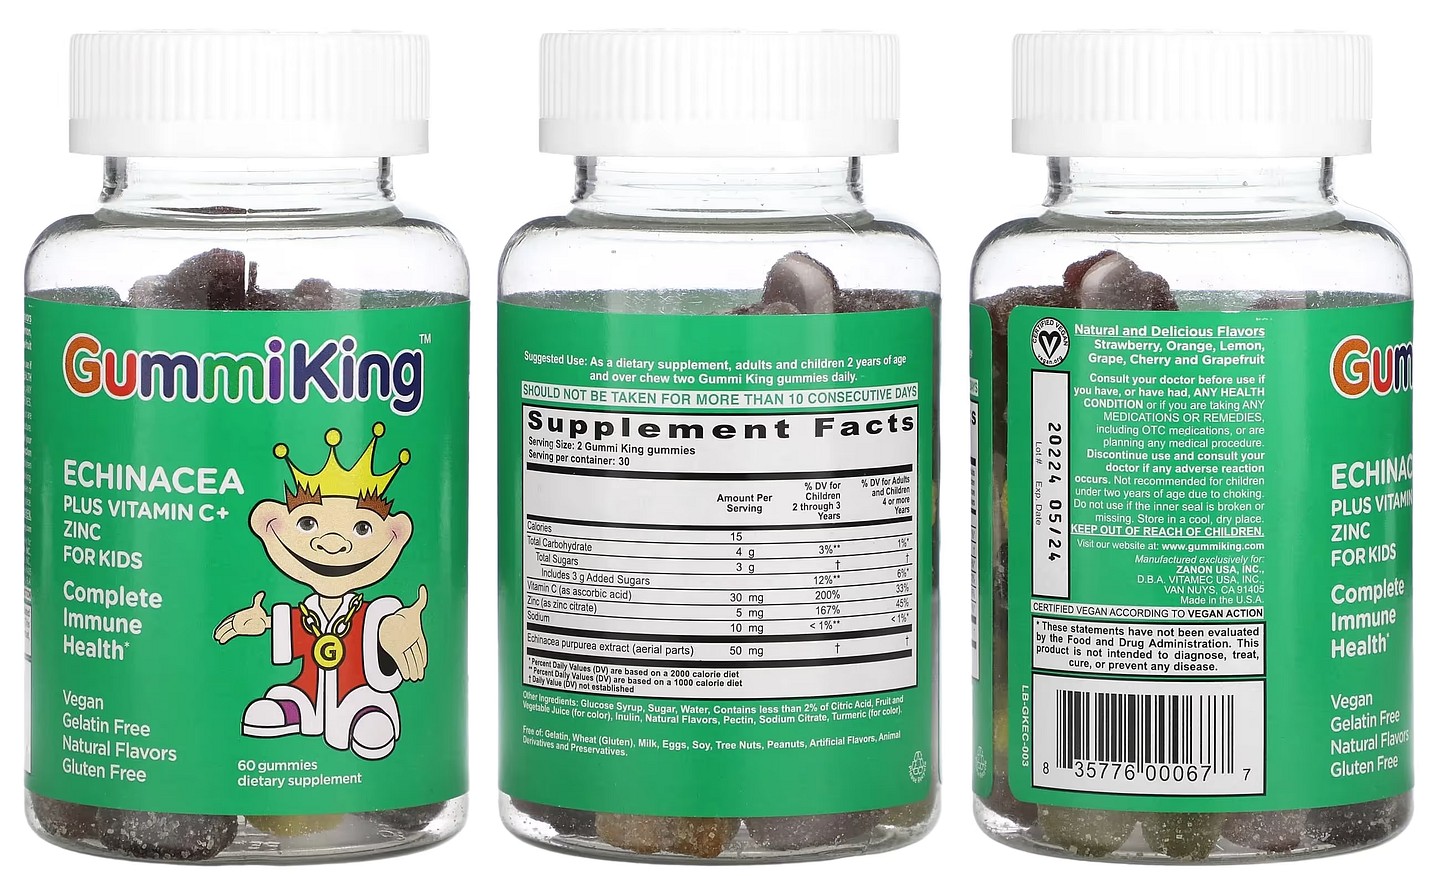 GummiKing, Echinacea Plus Vitamin C+ Zinc for Kids packaging